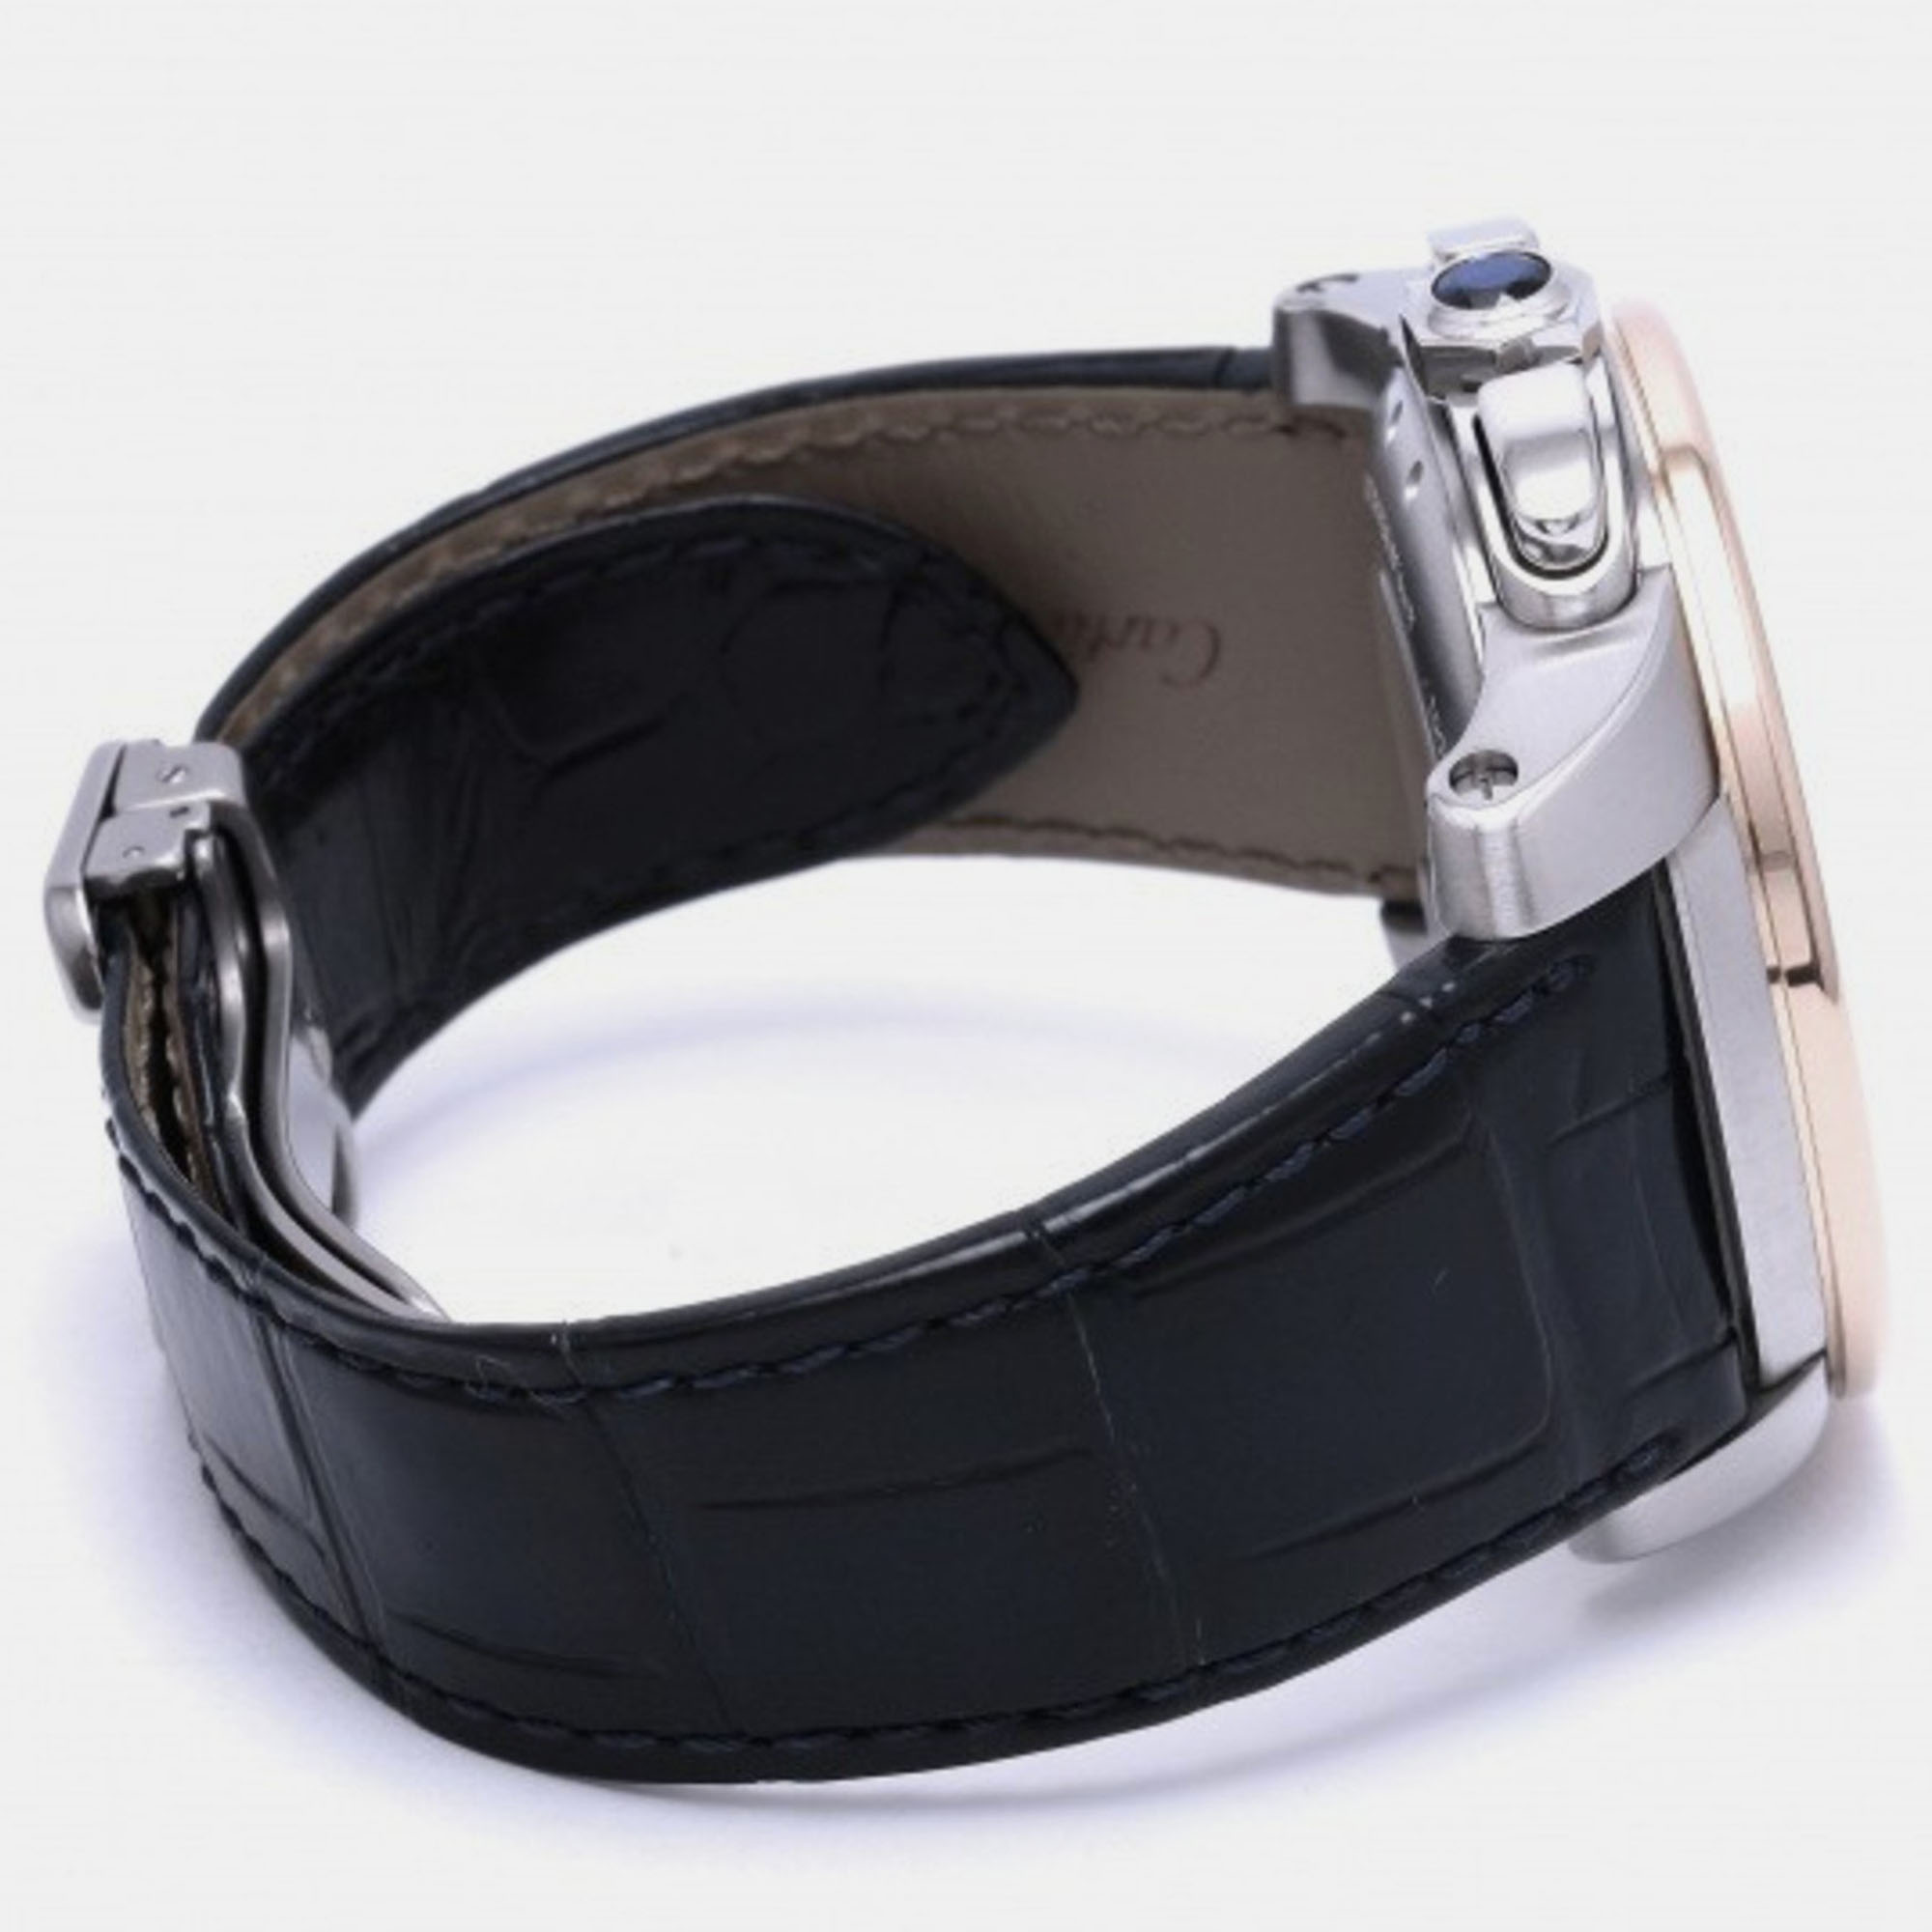 Cartier Silver 18k Rose Gold And Stainless Steel Calibre De Cartier W7100043 Automatic Men's Wristwatch 42 Mm